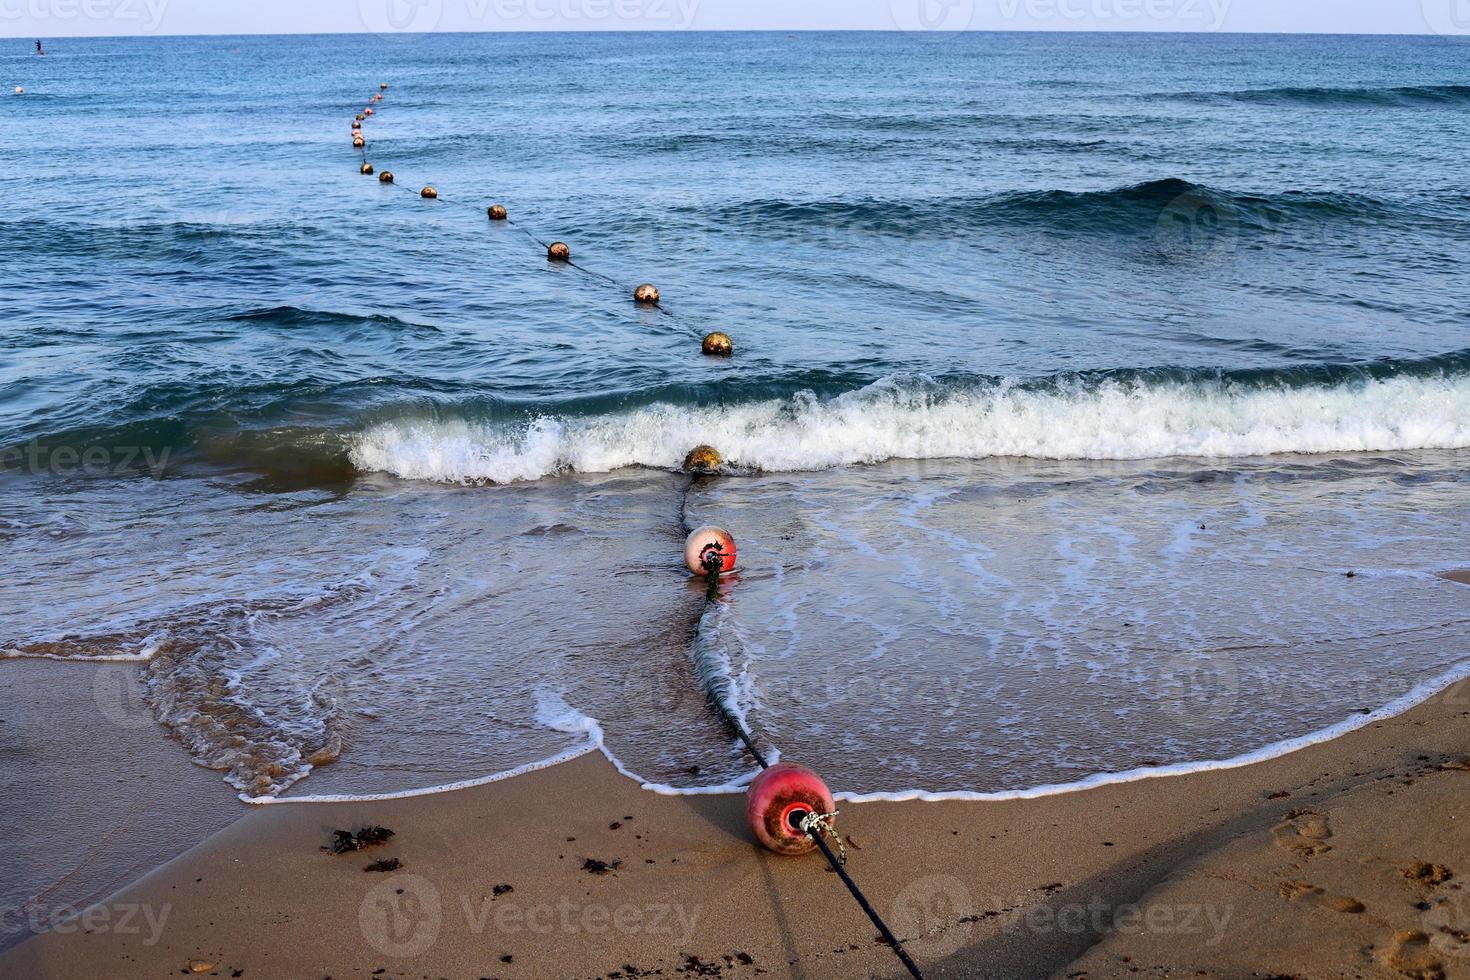 Sandy beach on the Mediterranean Sea in northern Israel. photo